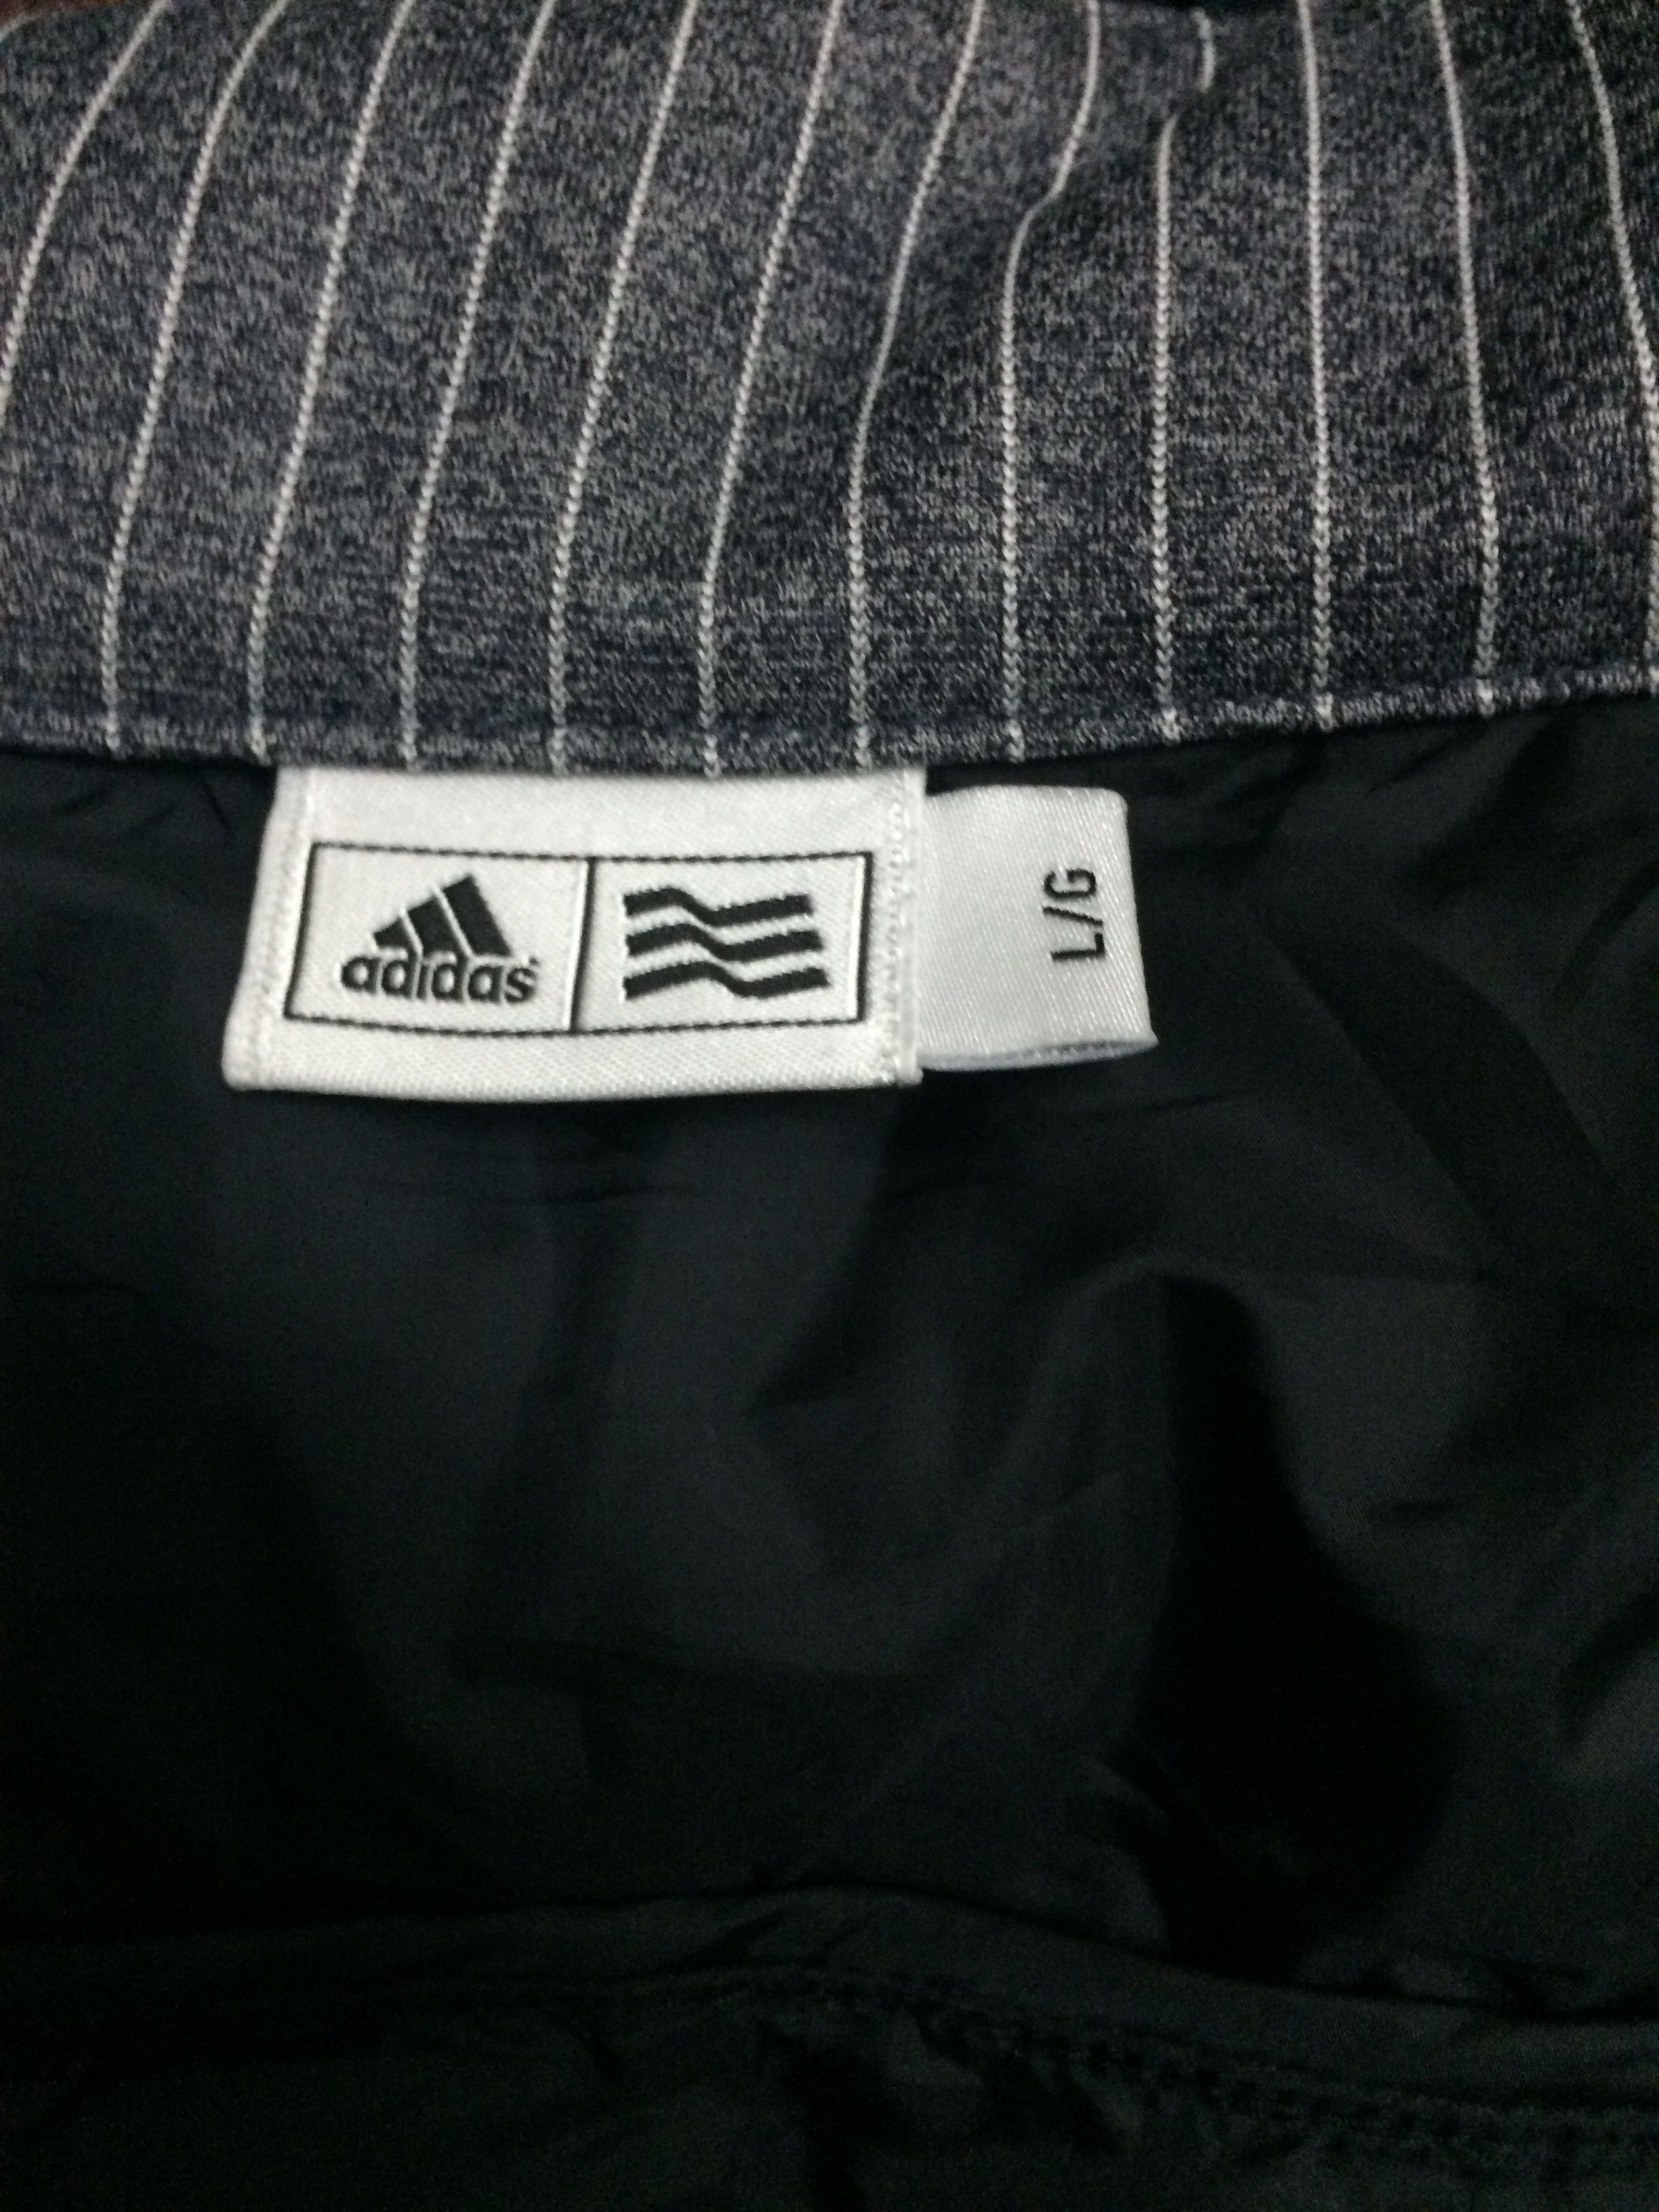 Adidas adidas puffer vest jacket Size US L / EU 52-54 / 3 - 5 Thumbnail